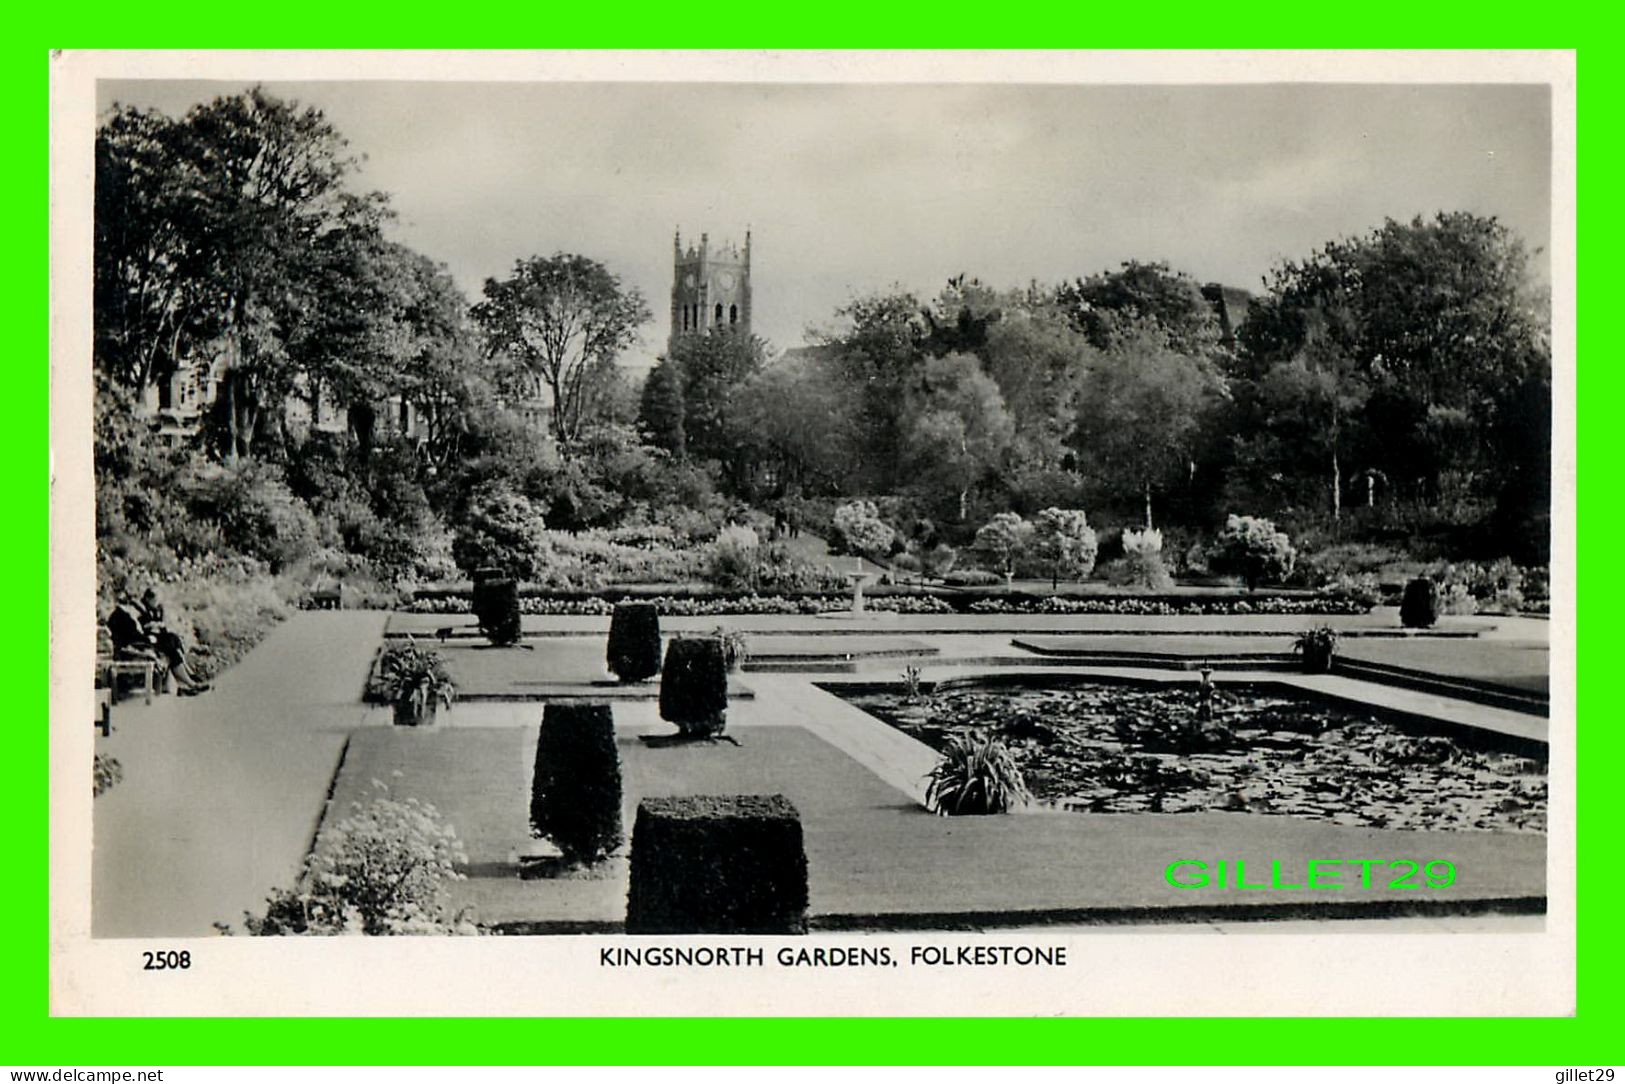 FOLKESTONE, KENT, UK - KINGSNORTH GARDENS - PUB. BY C. RICHTER PUB. LTD - REAL PHOTOGRAPH - - Folkestone